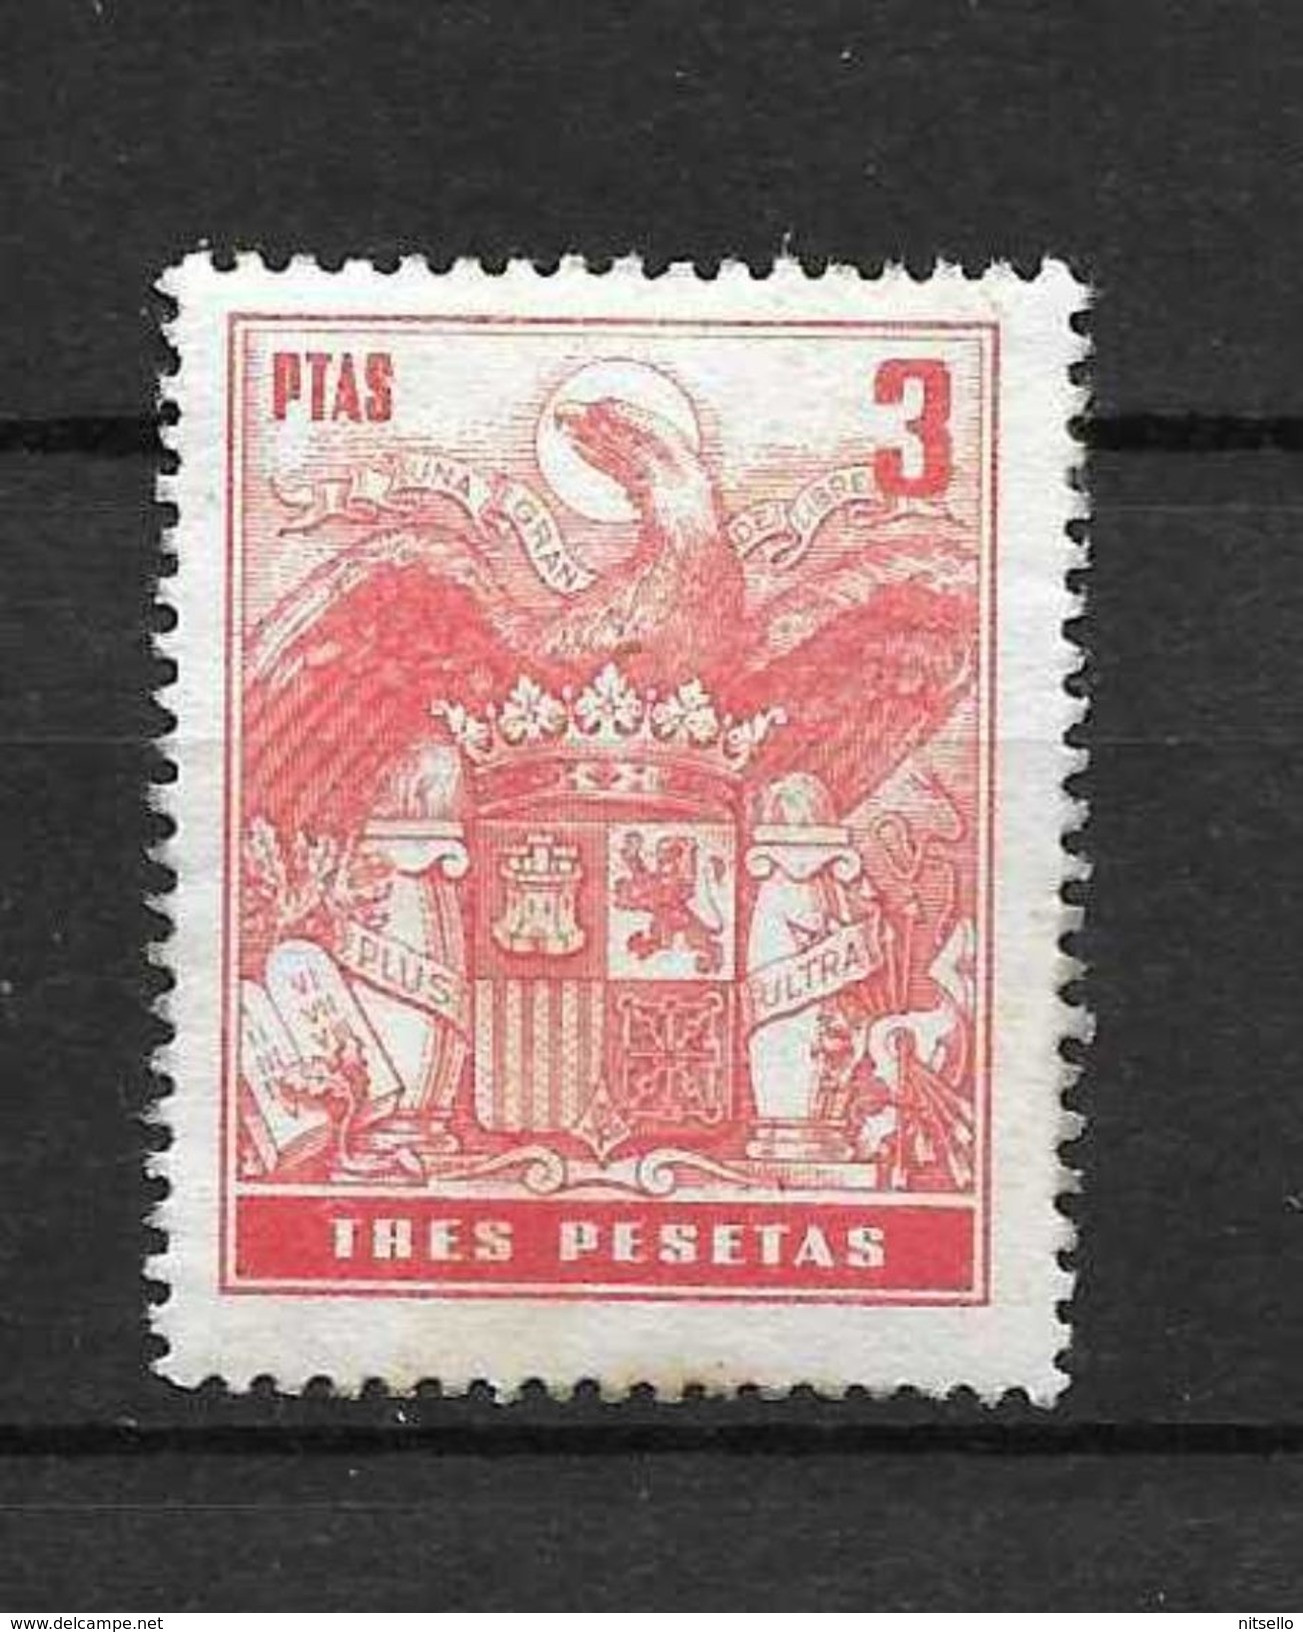 LOTE 1891 D  ///  ESPAÑA  SELLOS FISCALES  -  3 PTAS   SIN GOMA - Fiscali